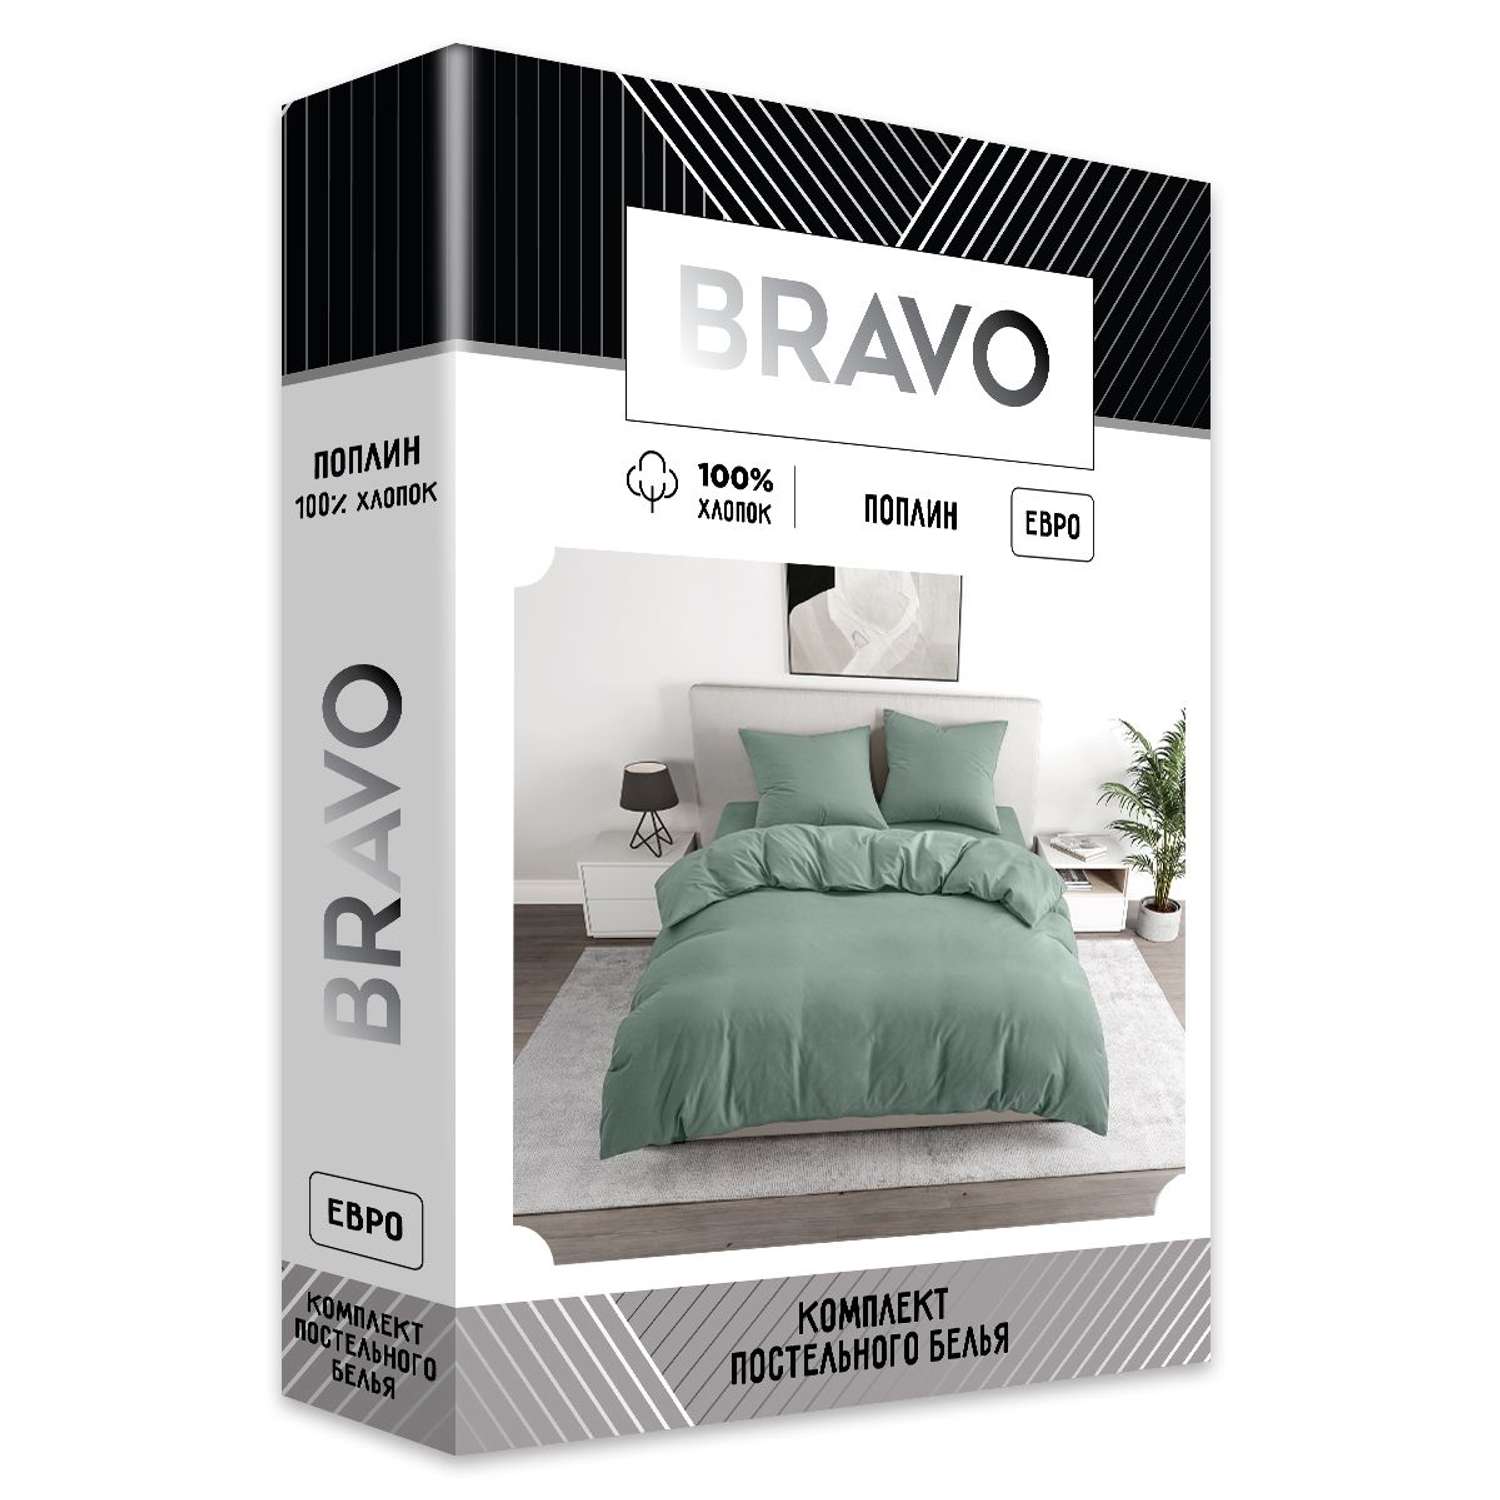 Комплект постельного белья BRAVO евро наволочки 70х70 рис.4549-1 зеленый - фото 5